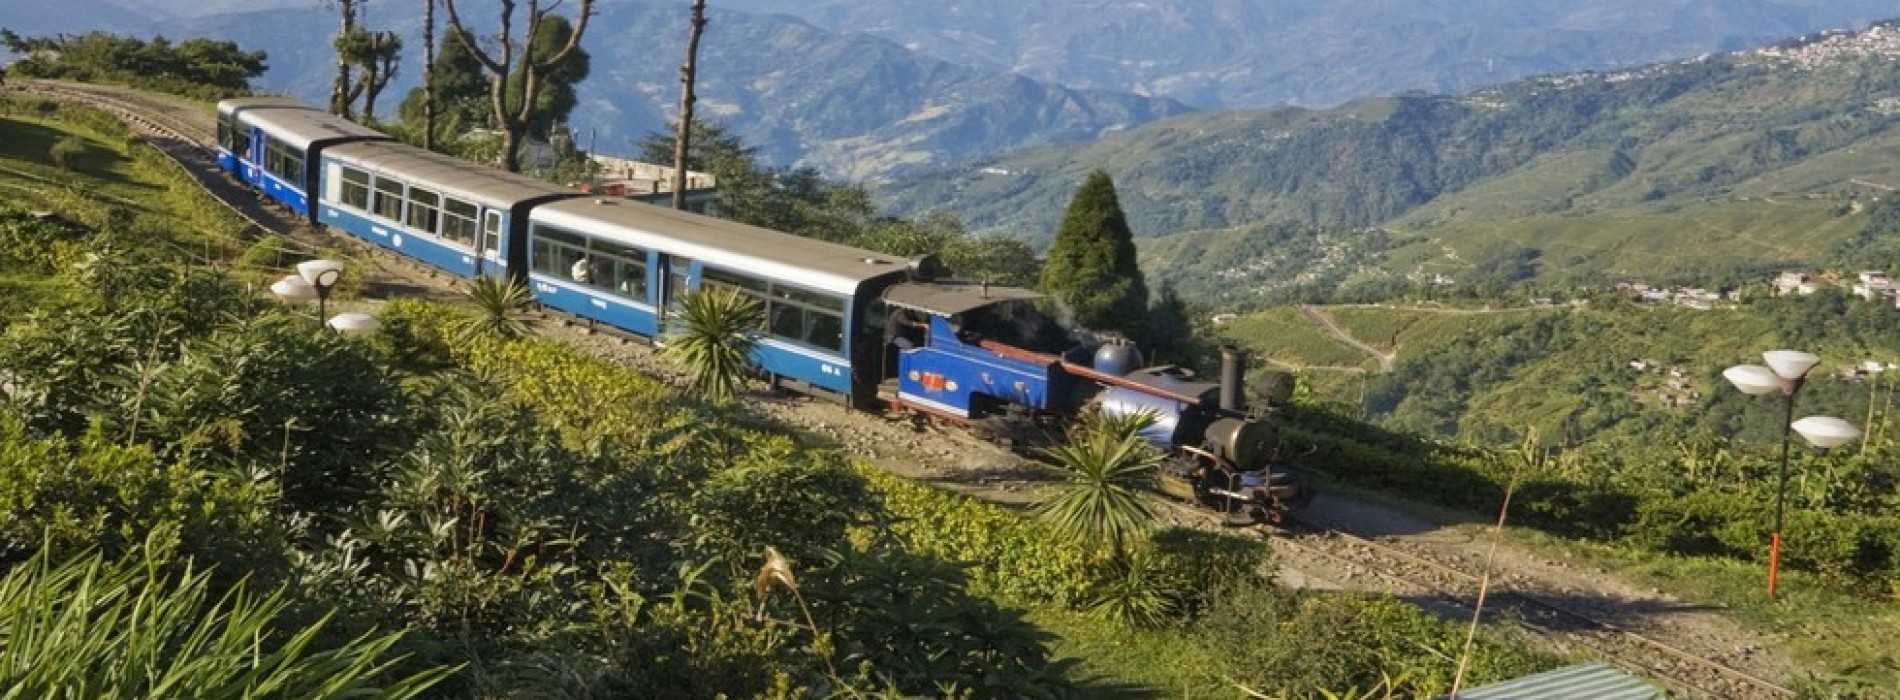 Darjeeling toy train loses Rs 2.5 crore due to agitation